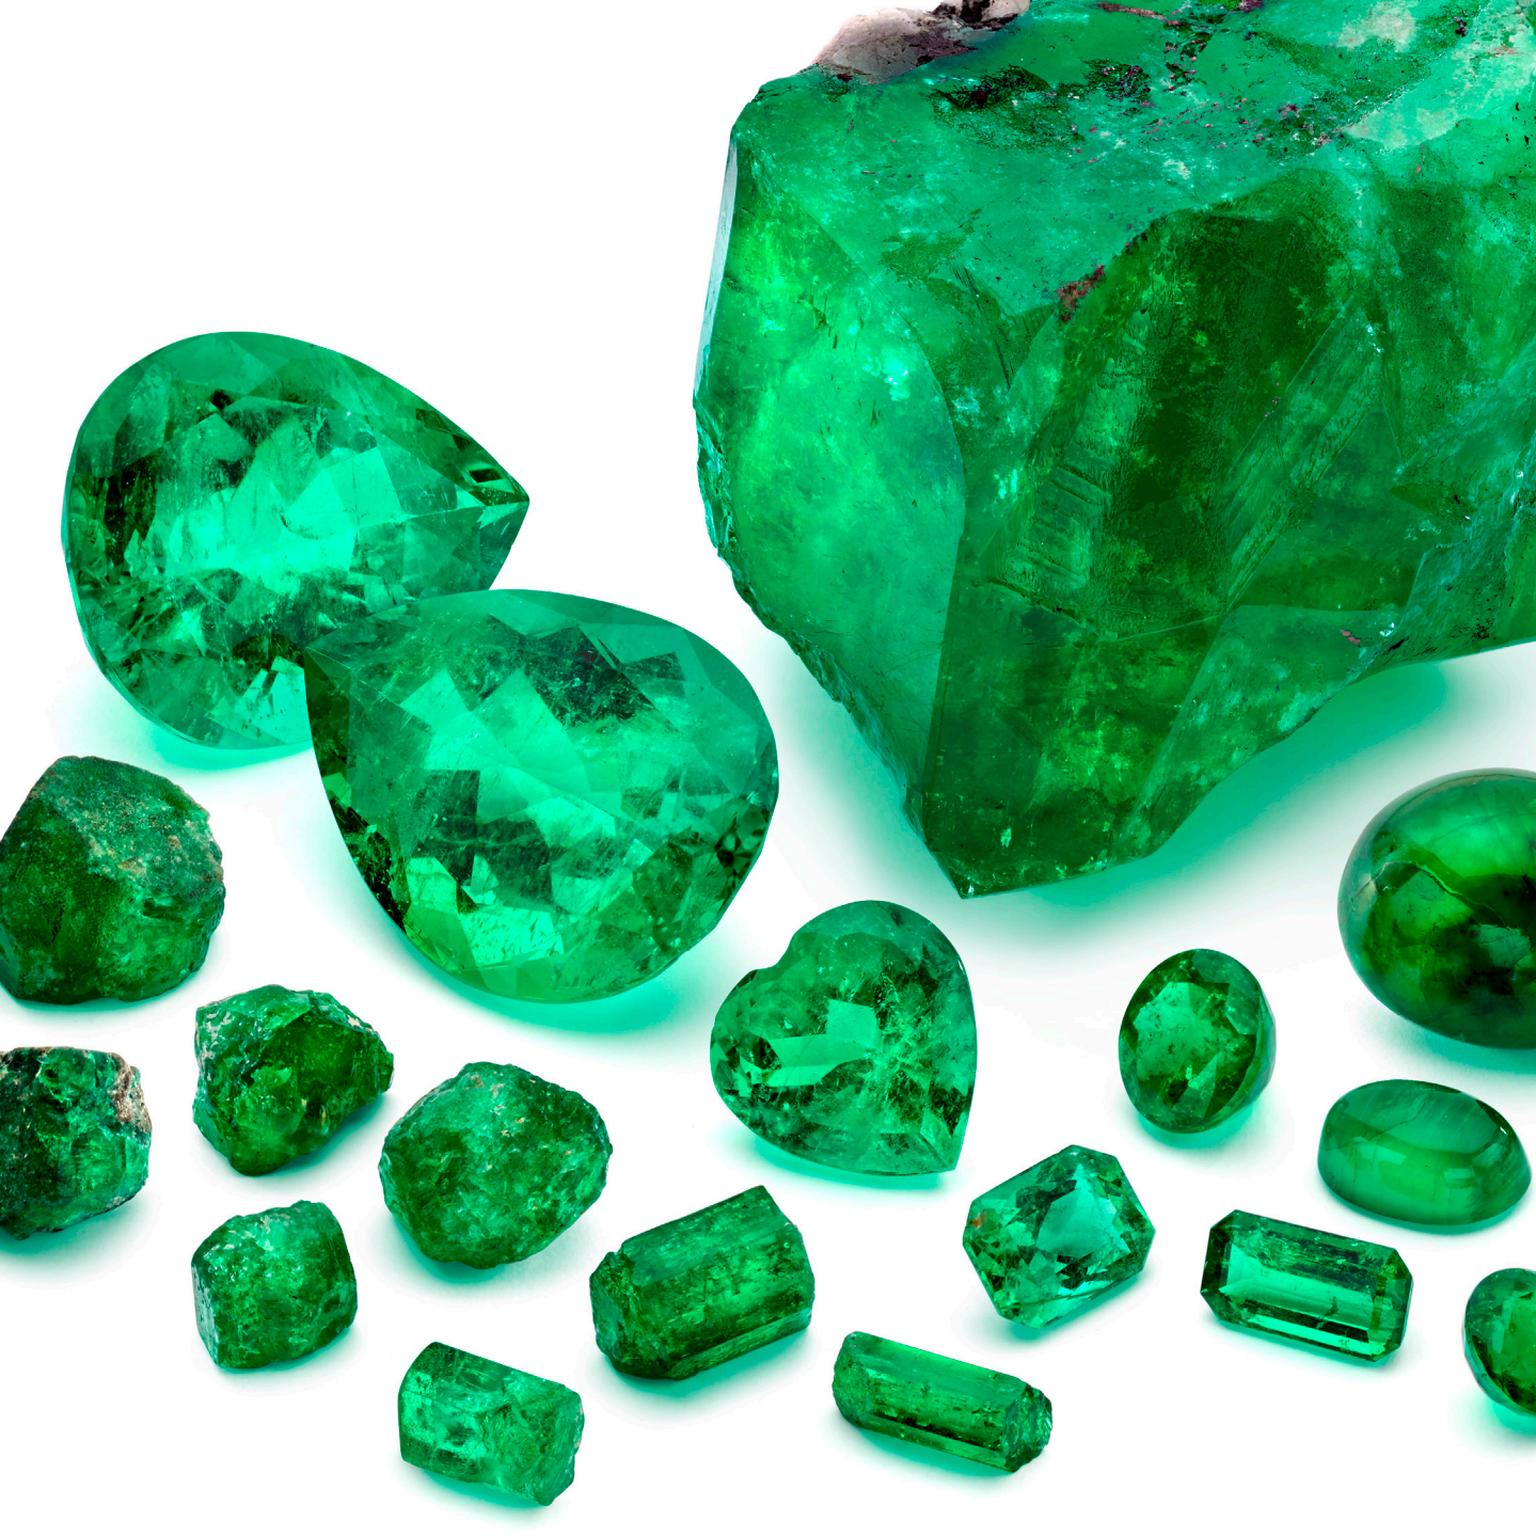 Marcial de Gomar Collection emeralds for auction